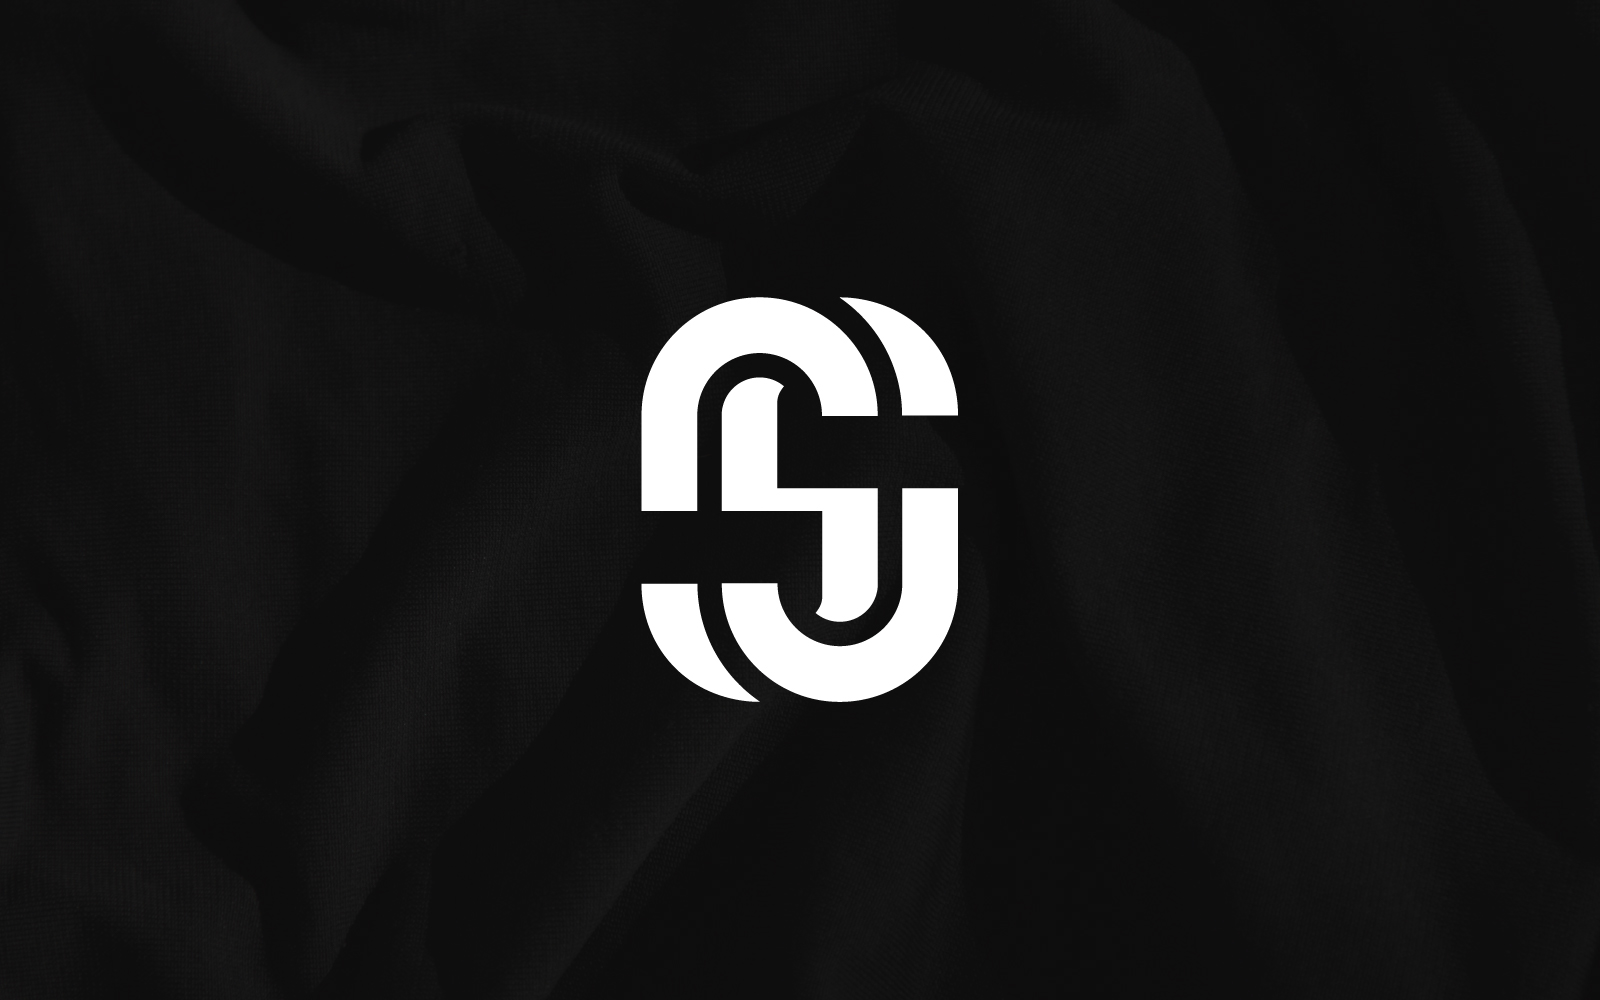 Letter S & C minimal logo design template